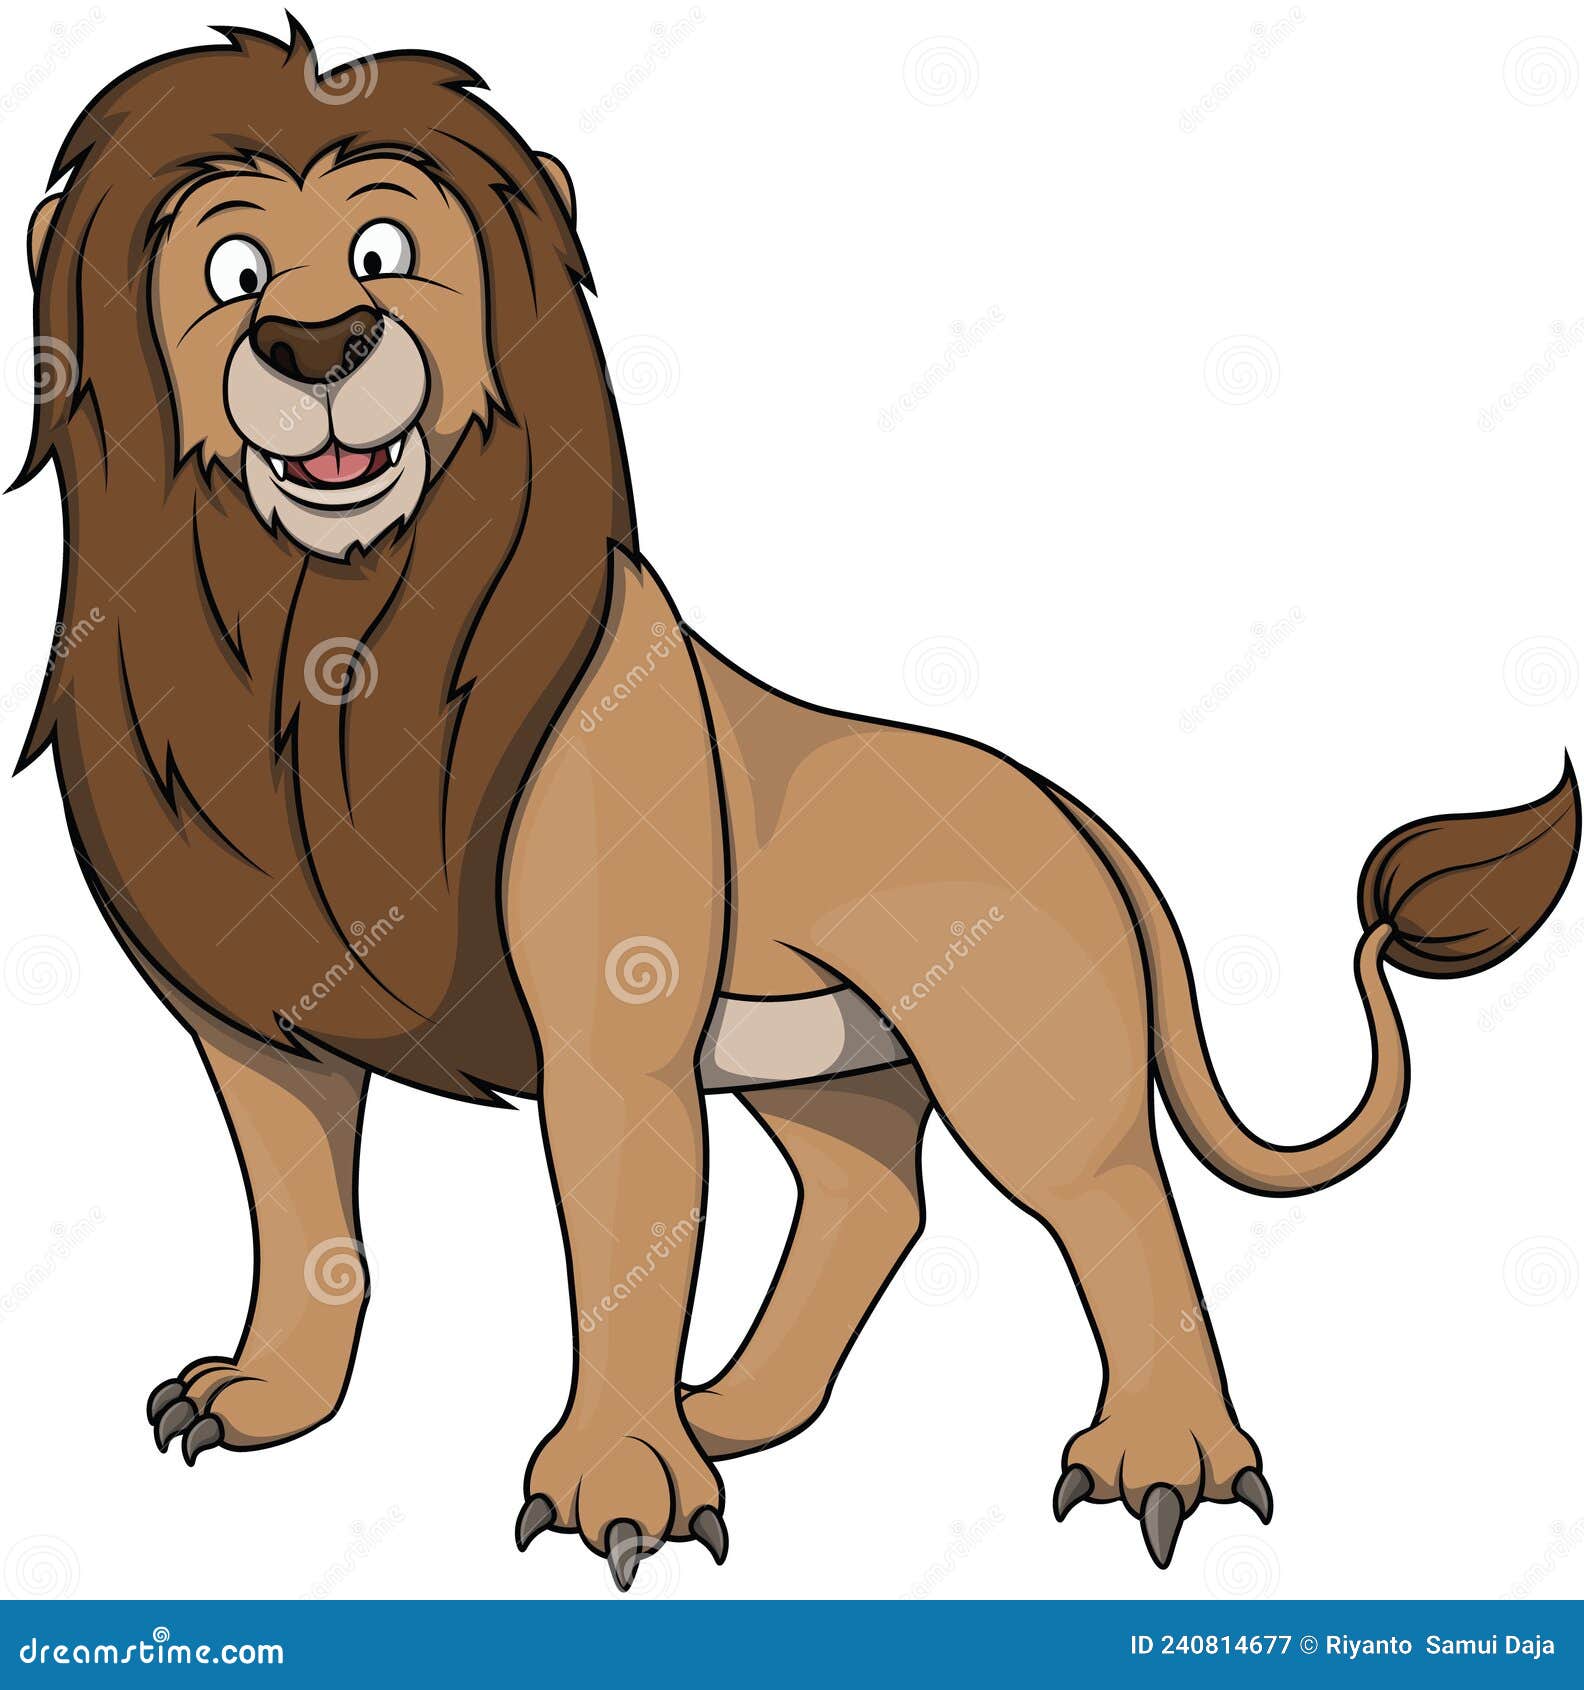 Friendly Lion Cartoon Color Illustration Stock Vector - Illustration of ...